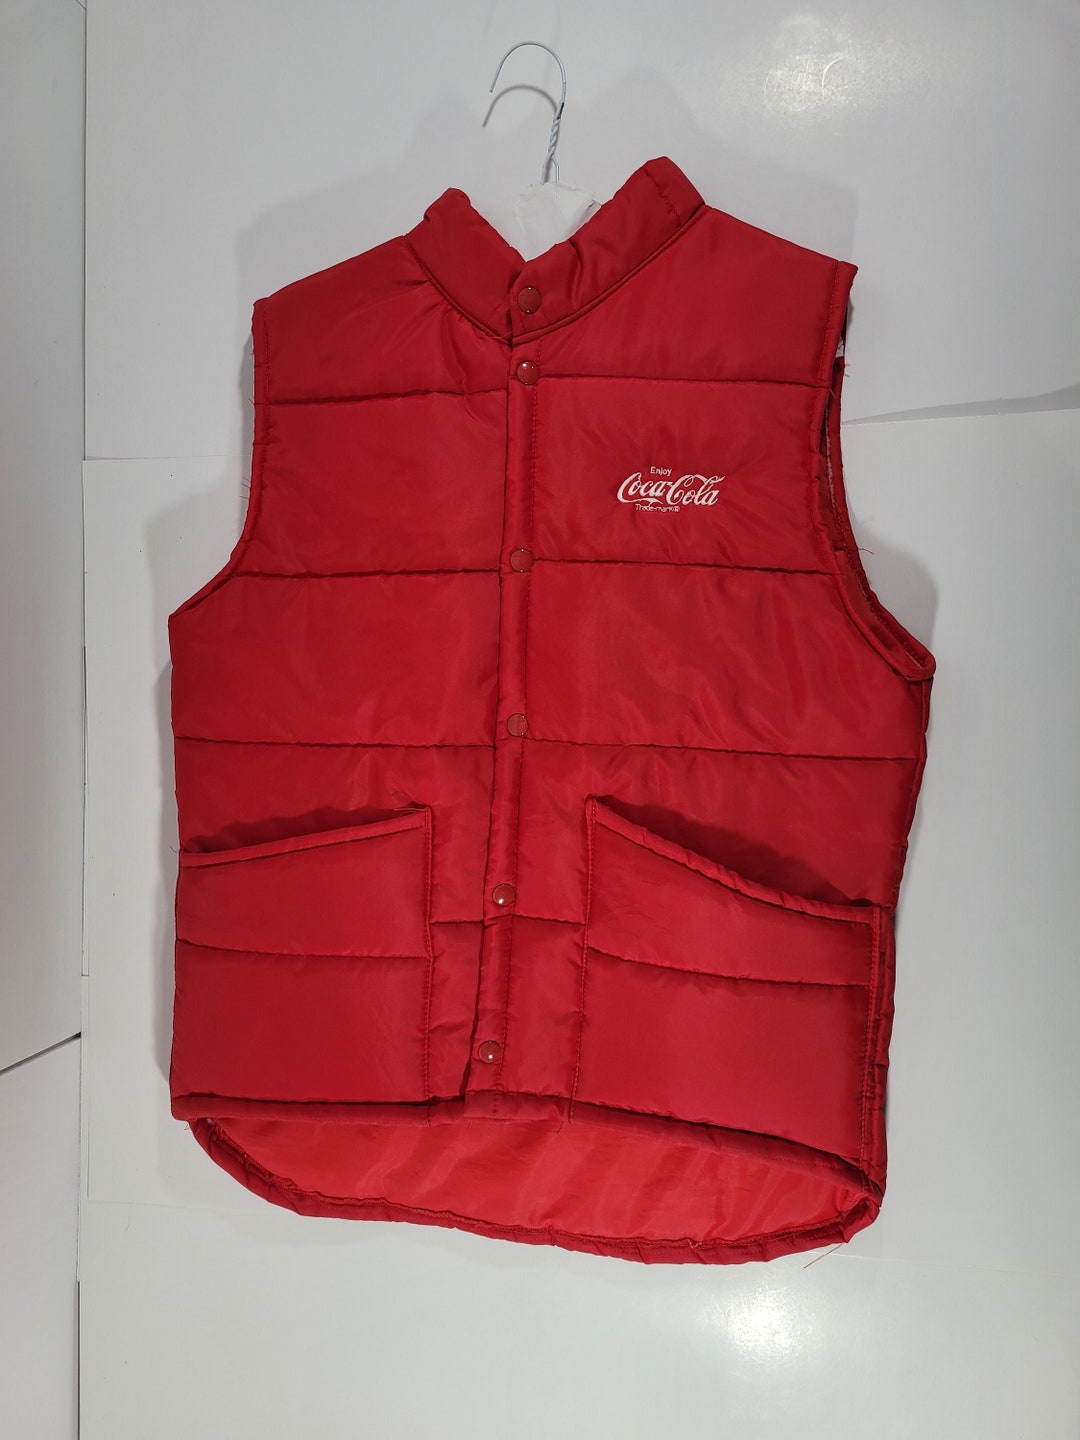 Coca-cola Red Puffer Vest by Turfur Size Men's Medium - Etsy